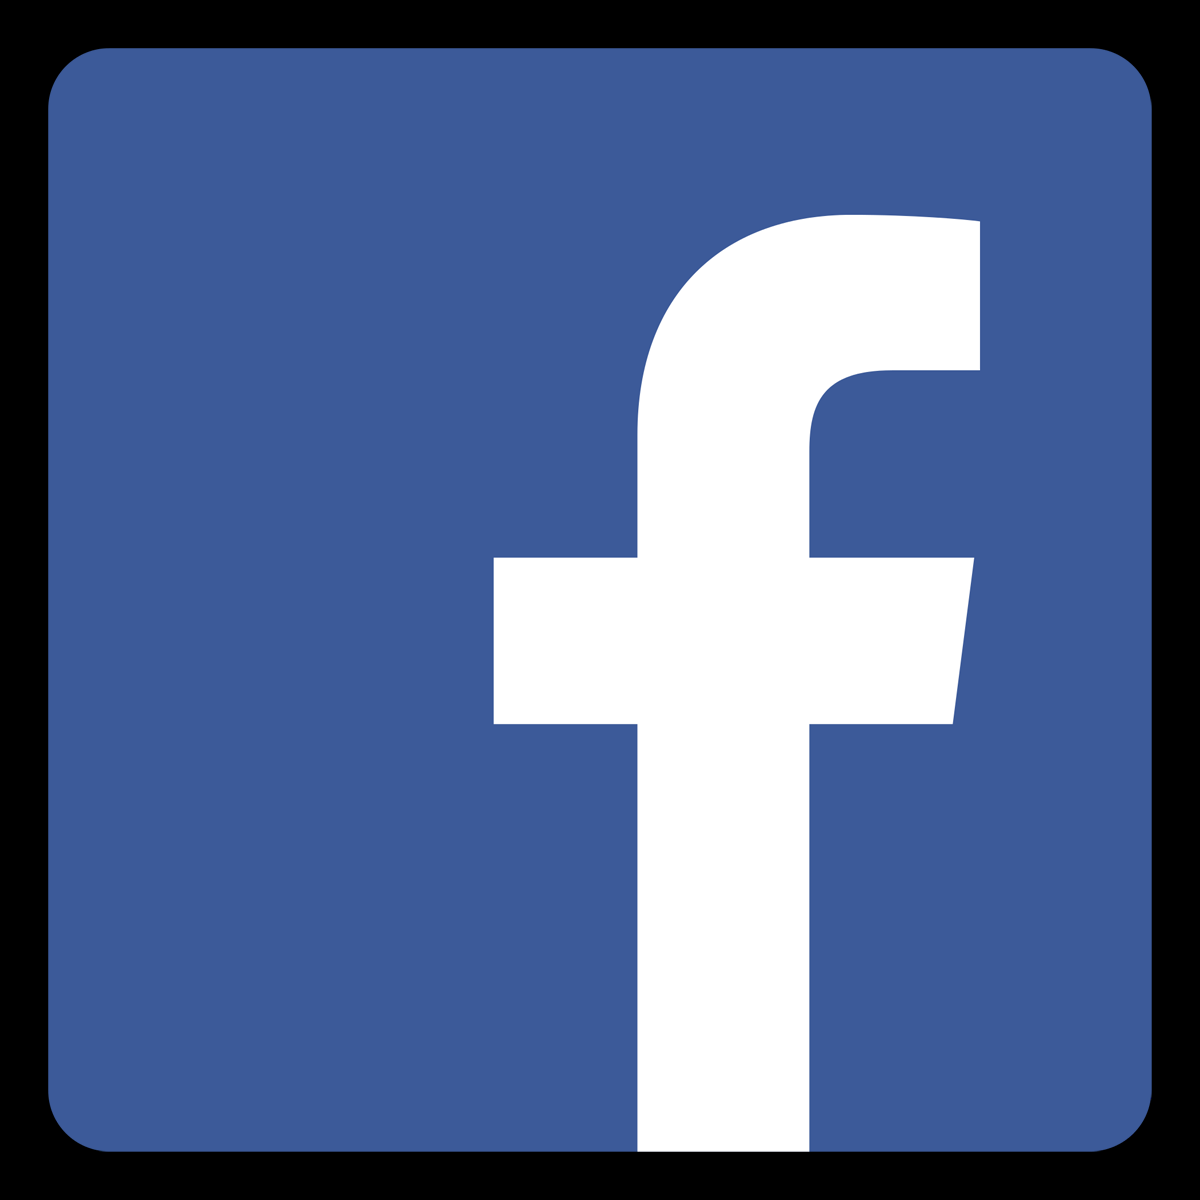 FB Logo.png